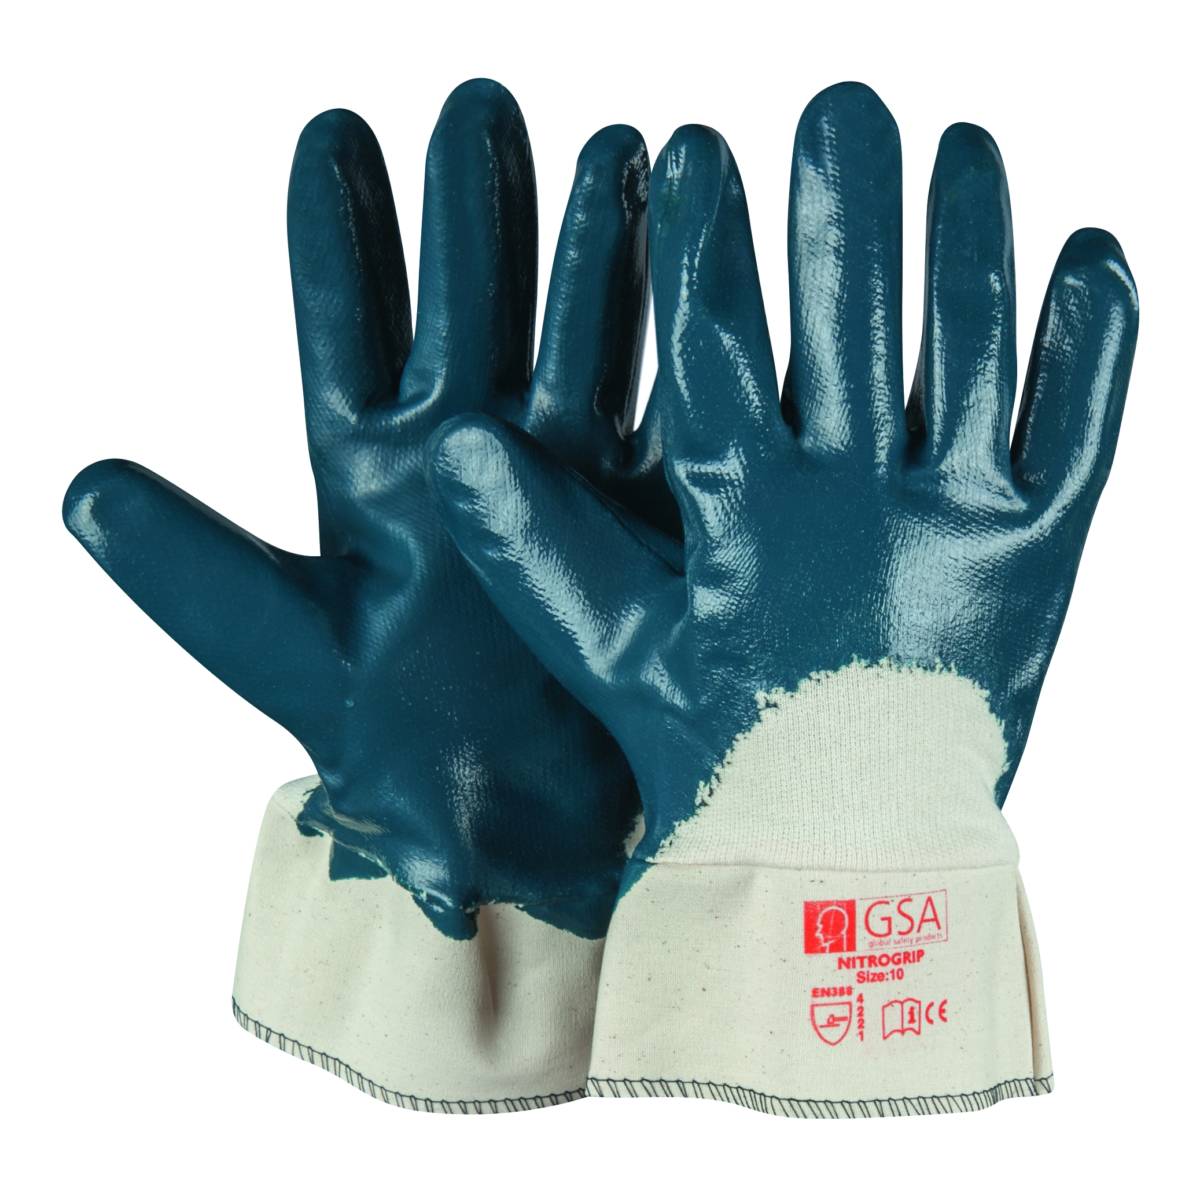 Glove nitrogrip - Mechanical protection - Vandeputte Safety Experts